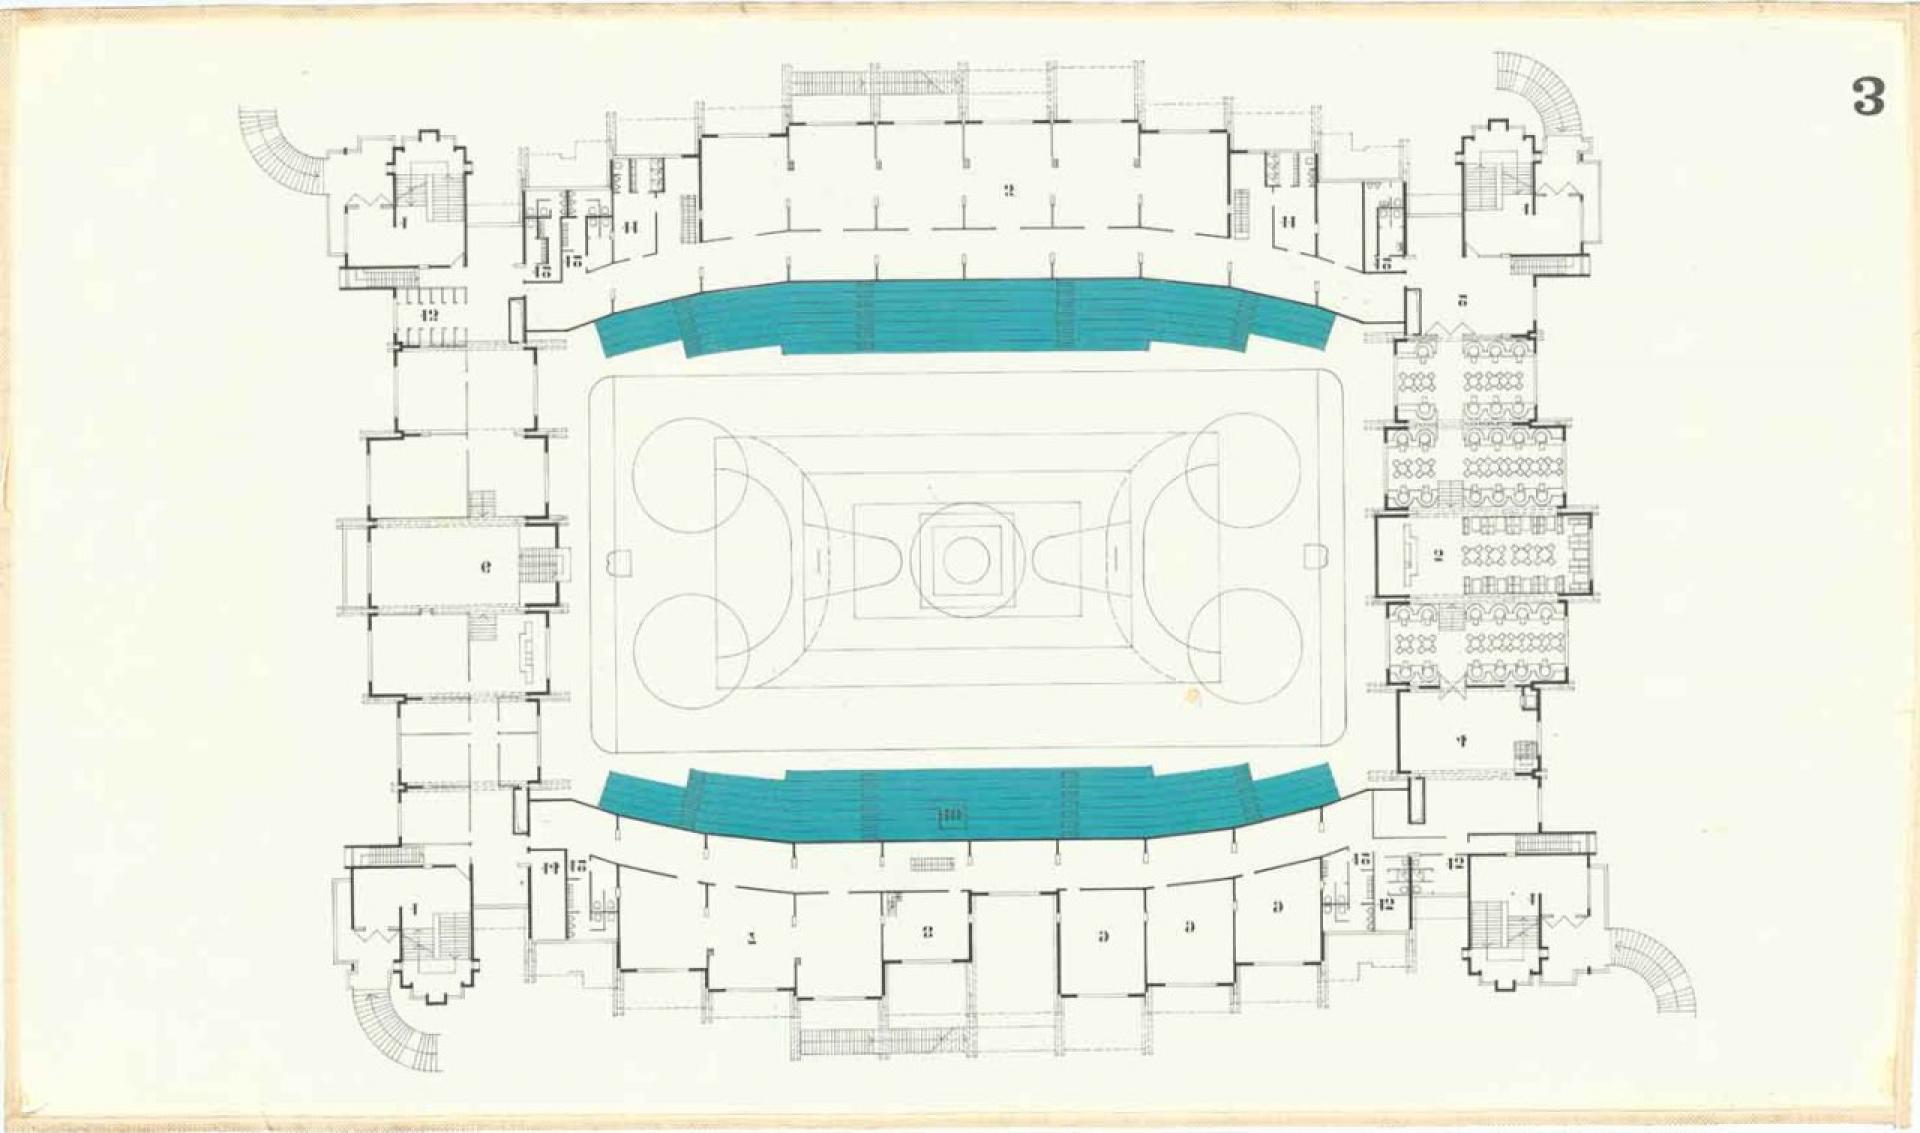 Floor plan for the Pionir Hall. | Courtesy of Dragoljub Bakić